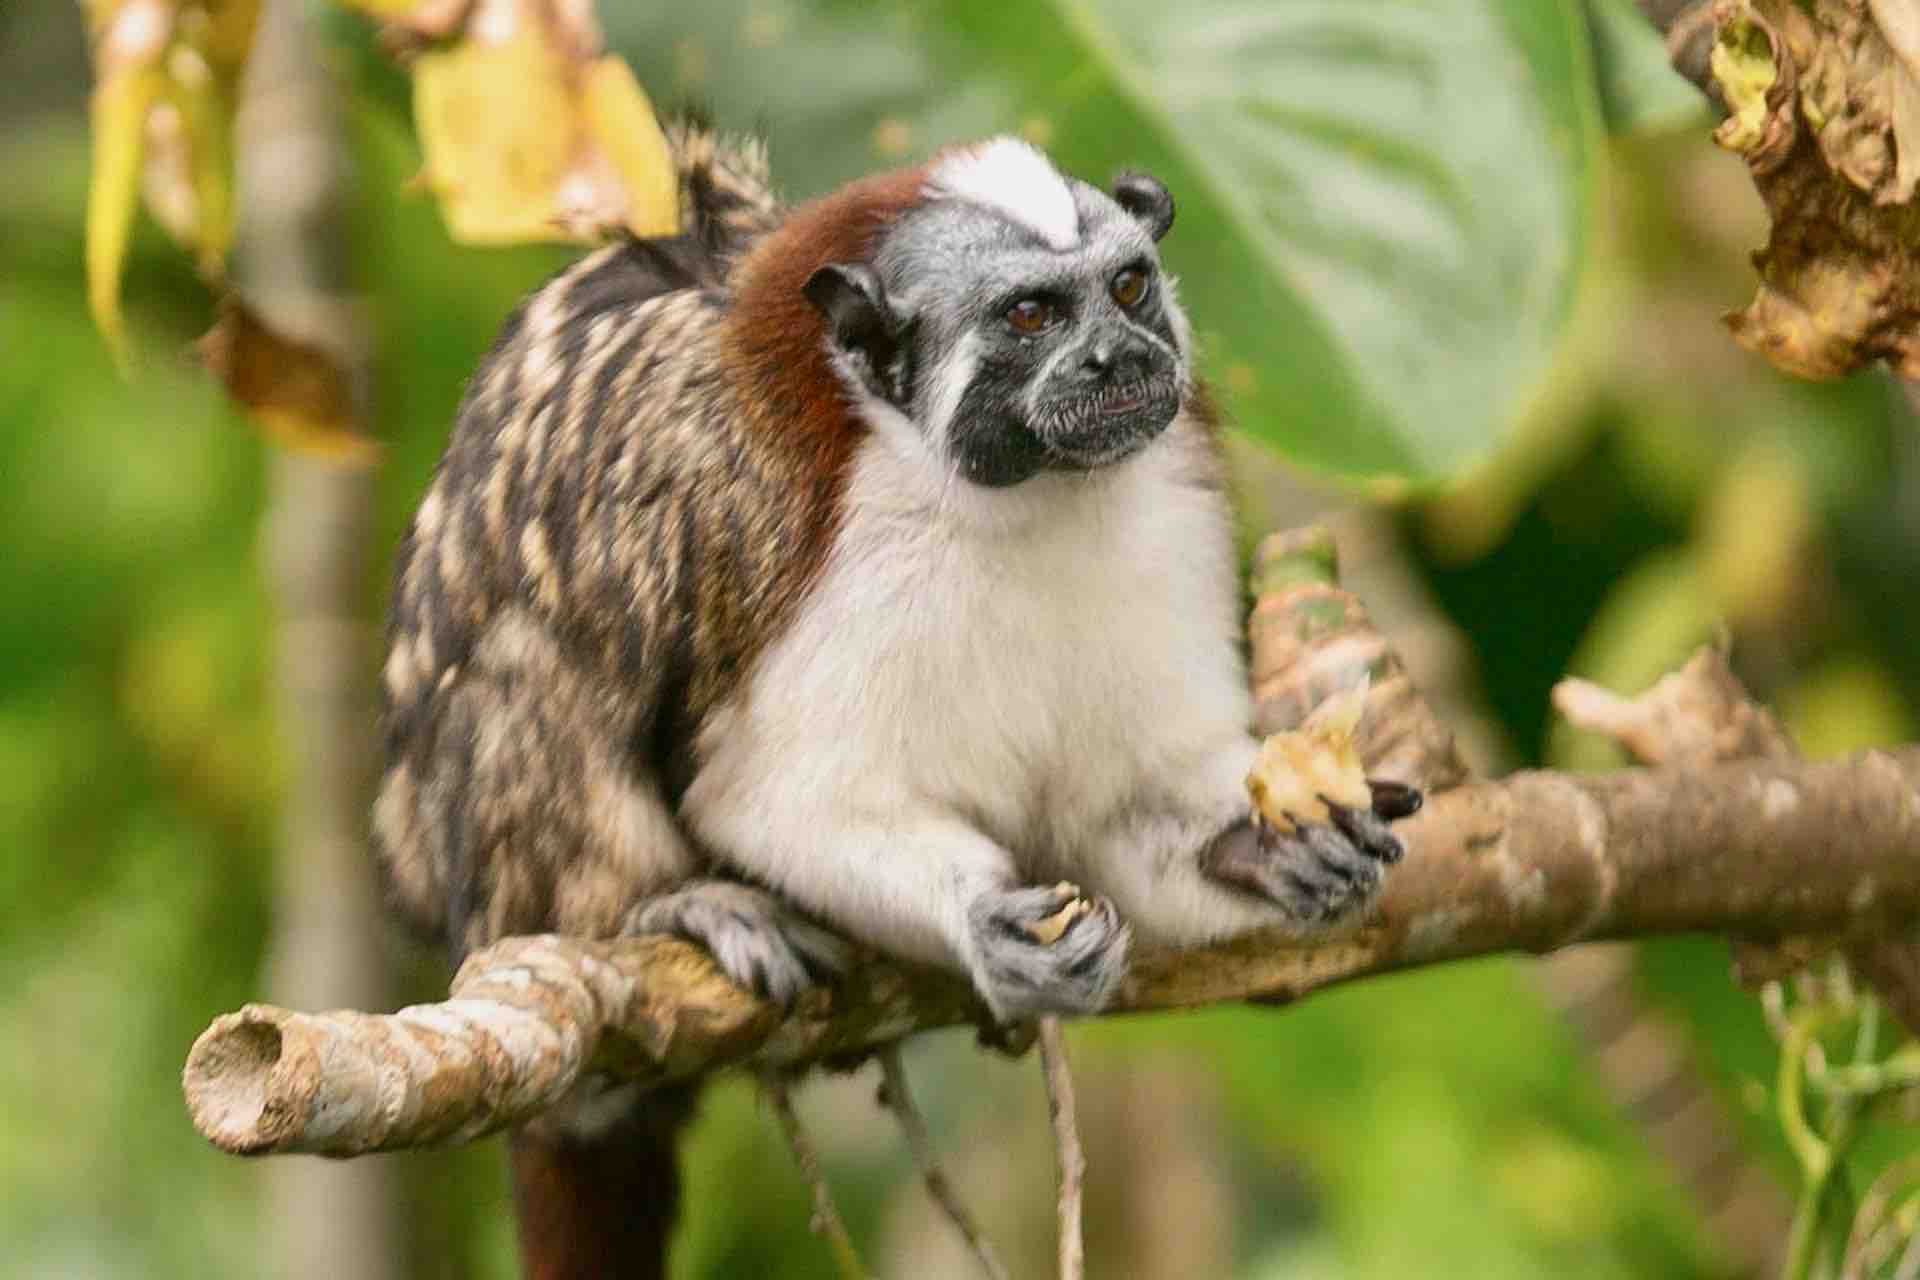 monkey island Panama tour monkey sitting on tree branch